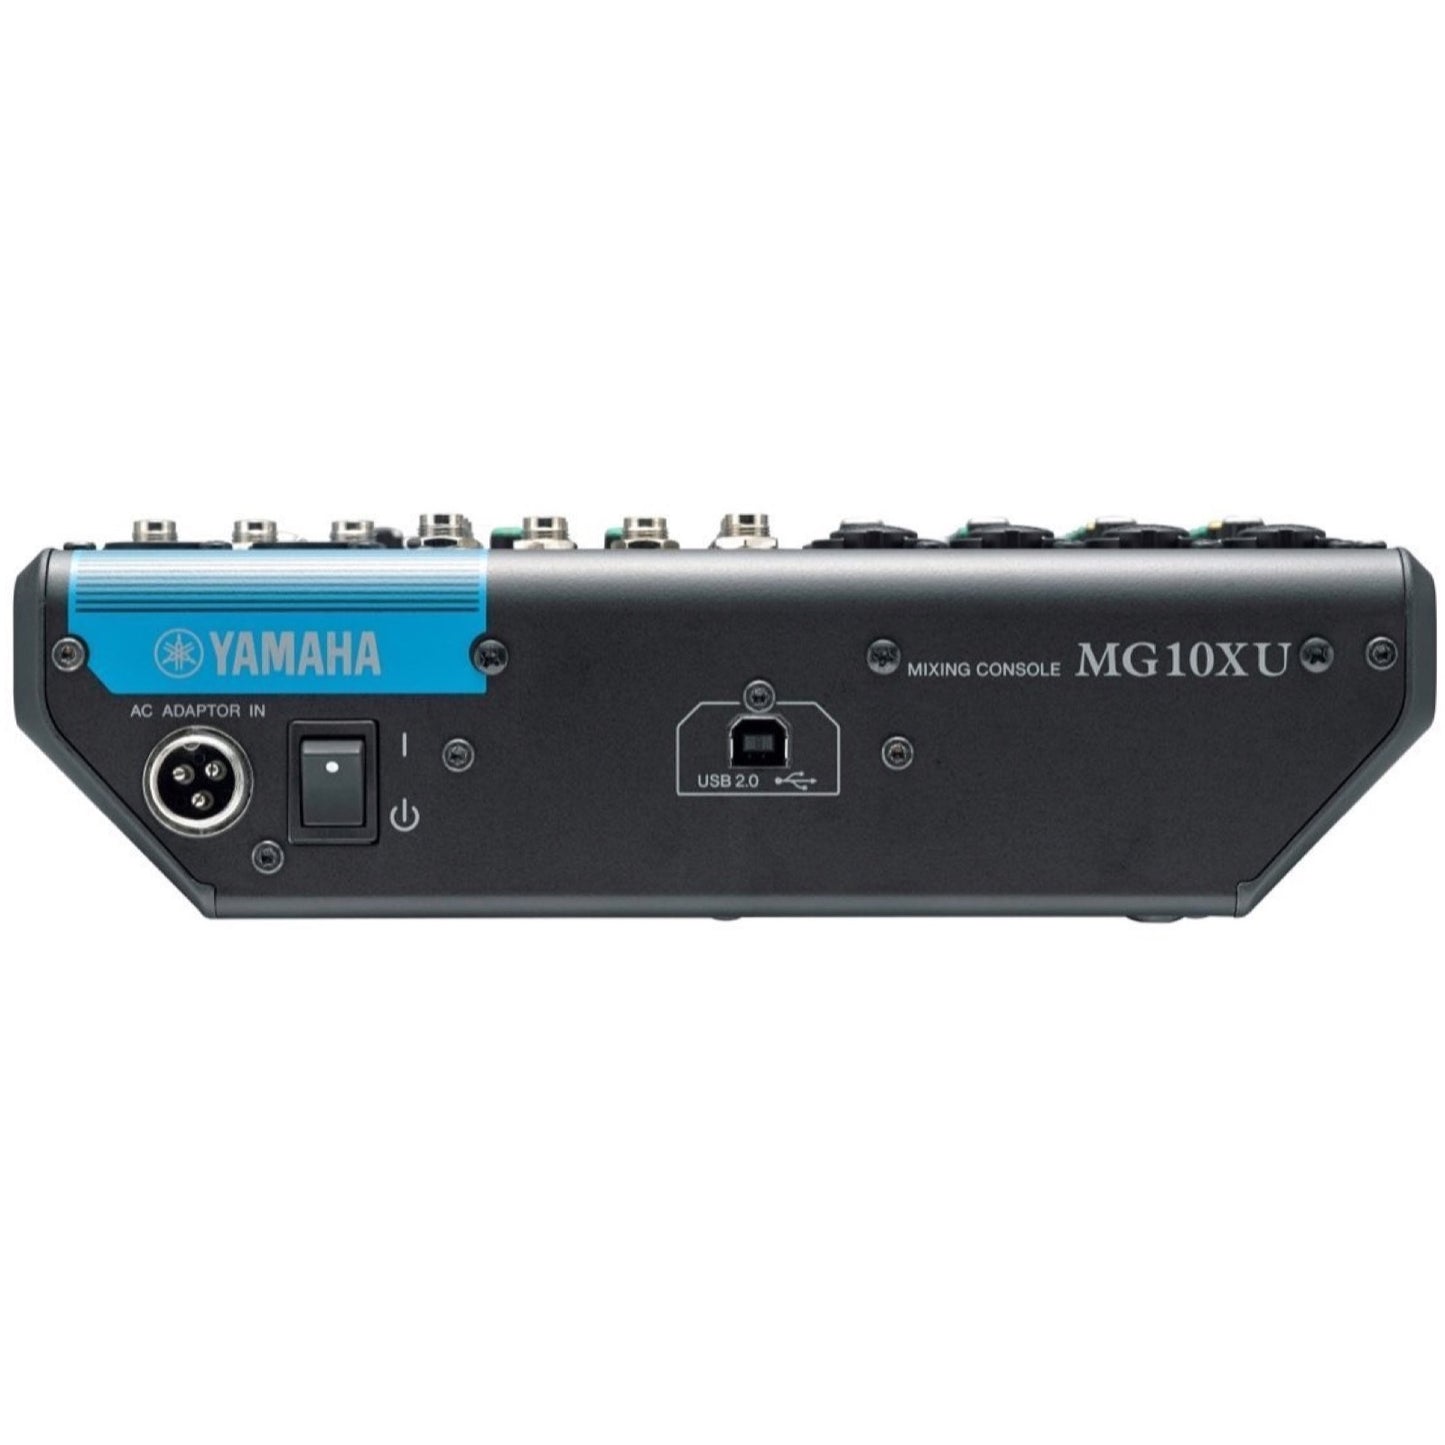 Yamaha MG10XU USB Stereo Mixer with Effects